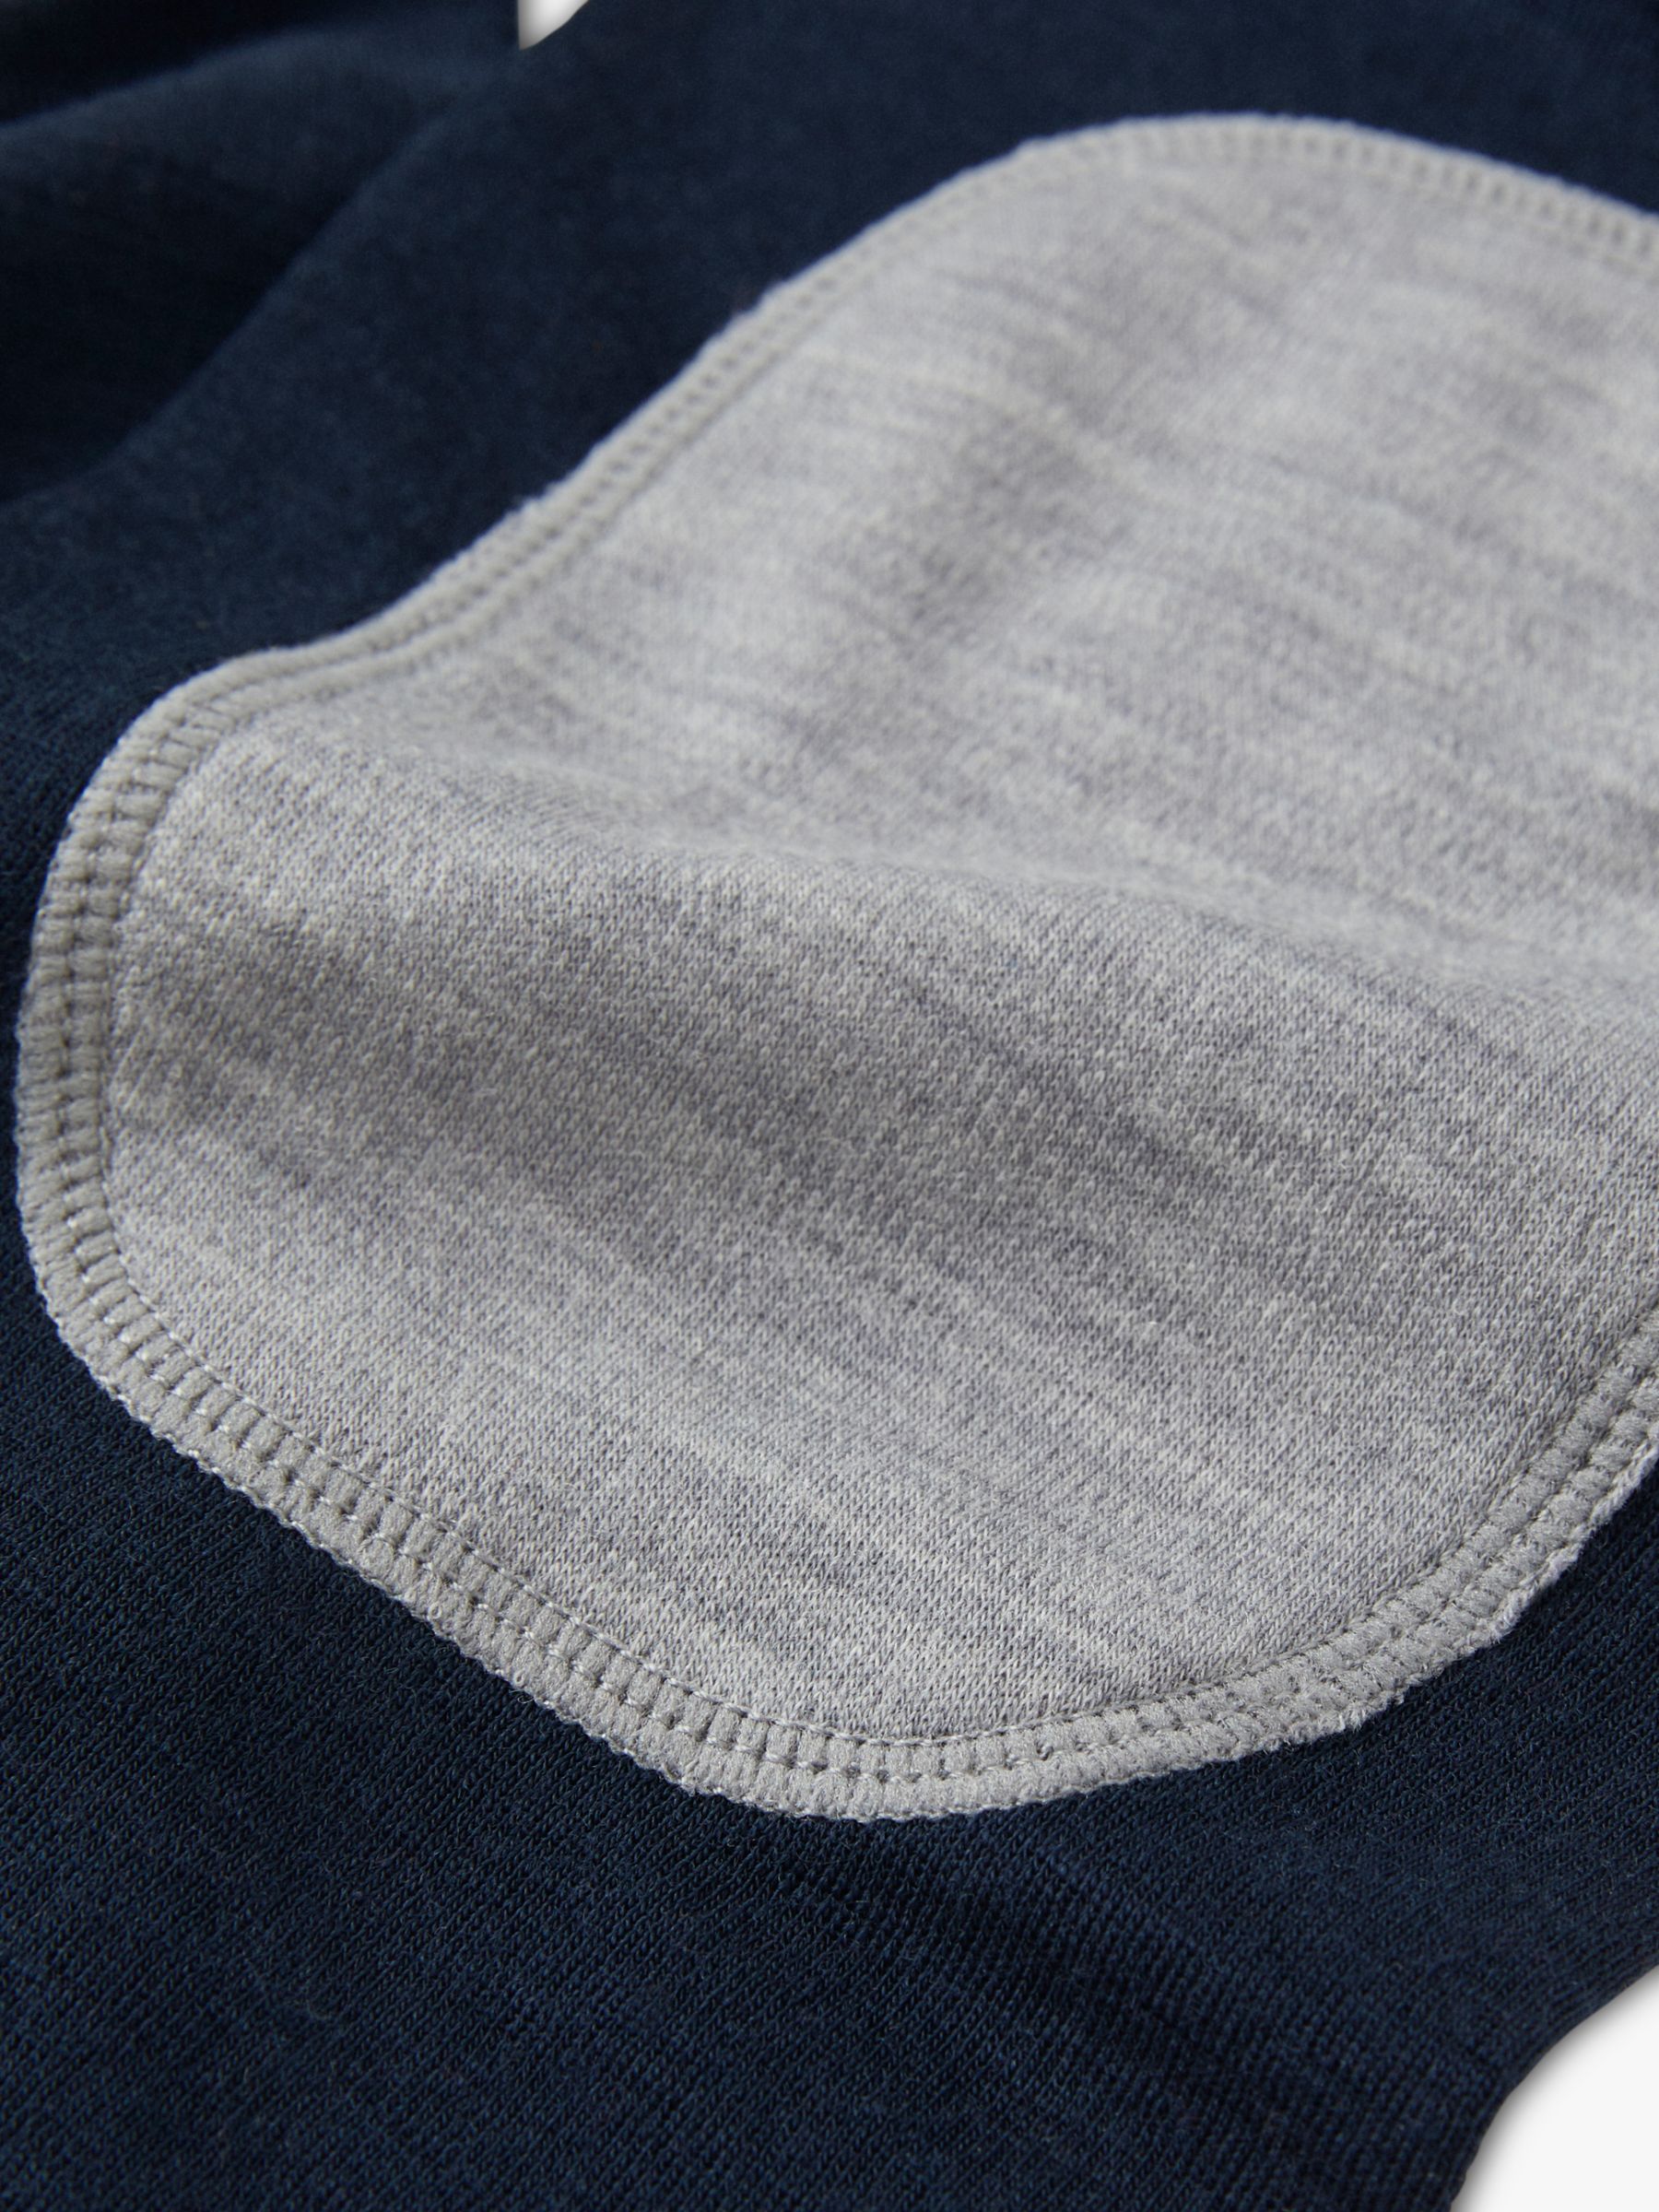 Polarn O. Pyret Kids' Merino Wool Contrast Knee Trousers, Blue/Grey, 6-12 months